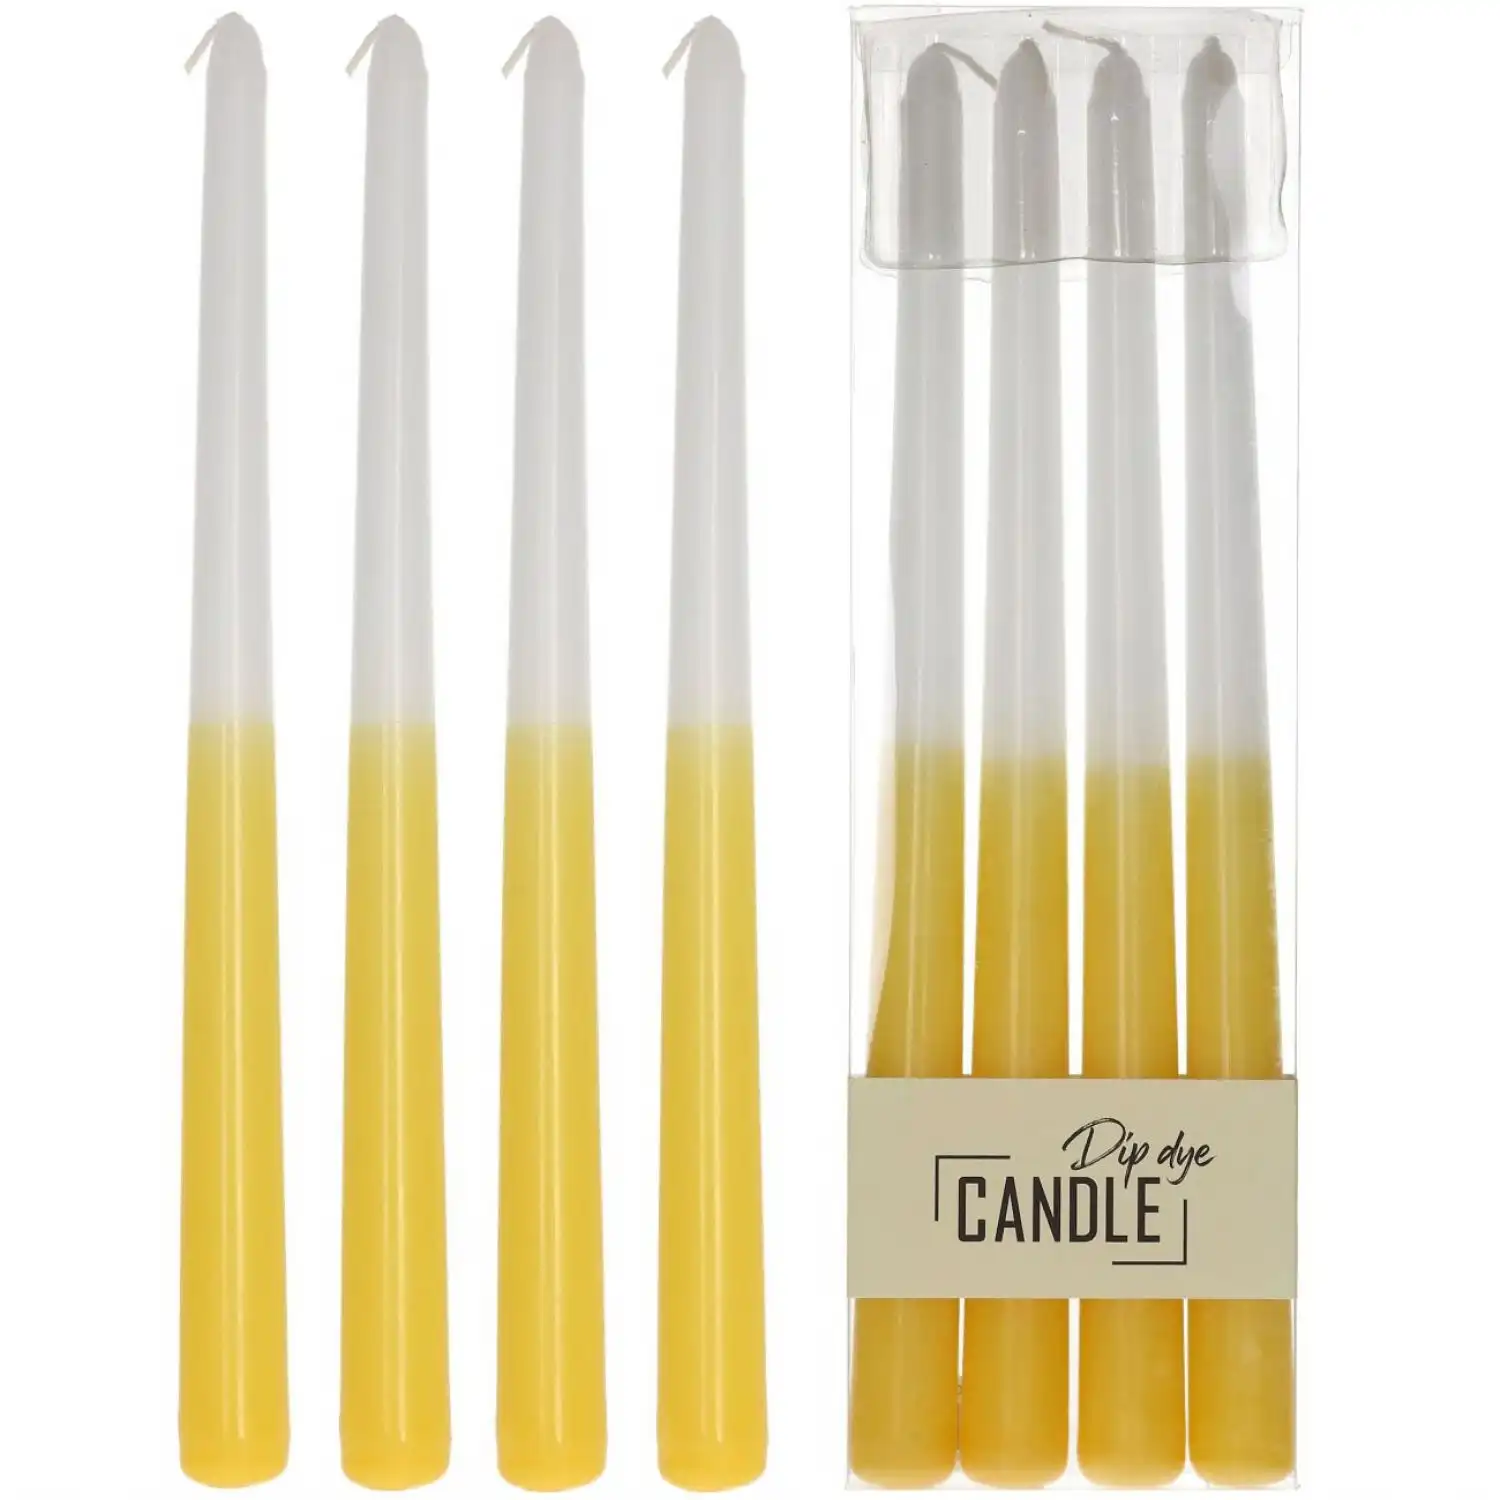 Candle Dip Dye Wax Yellow BOX 4